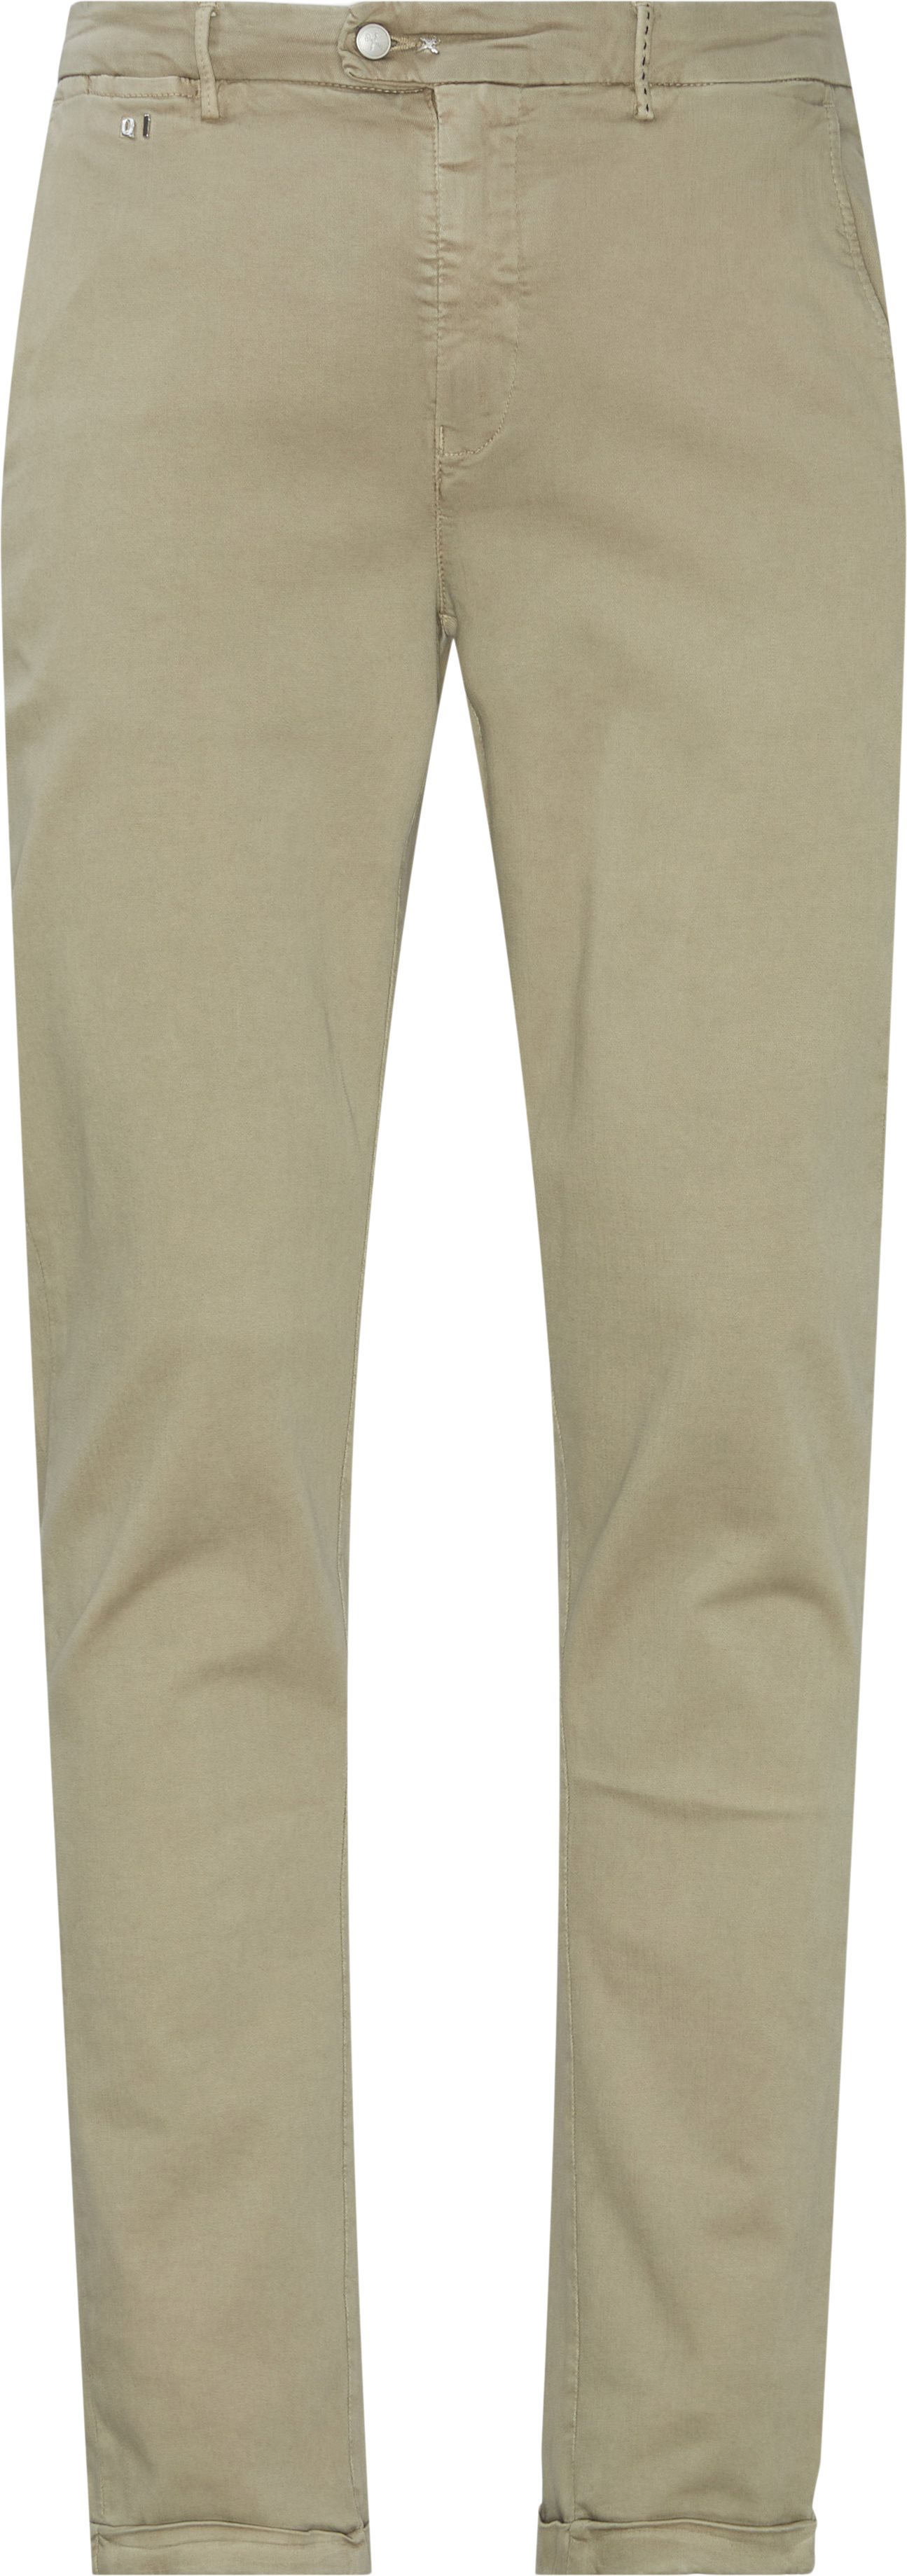 Tramarossa Trousers LUIS REGULAR G154 Sand